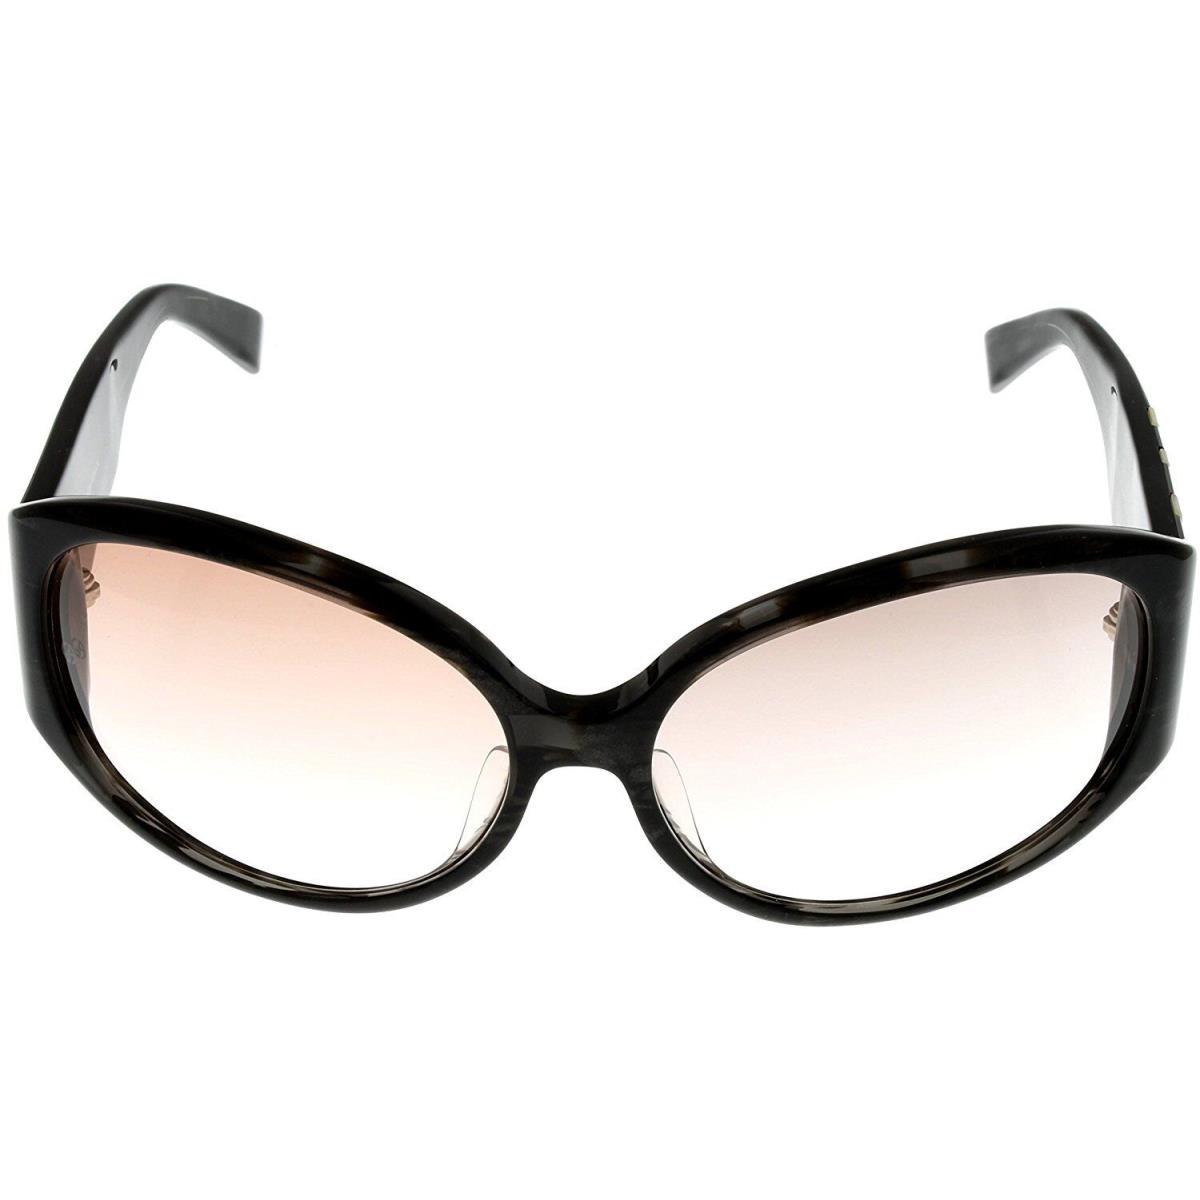 Giorgio Armani Sunglasses Women GA495 Prqso Black Fashion Rectangular